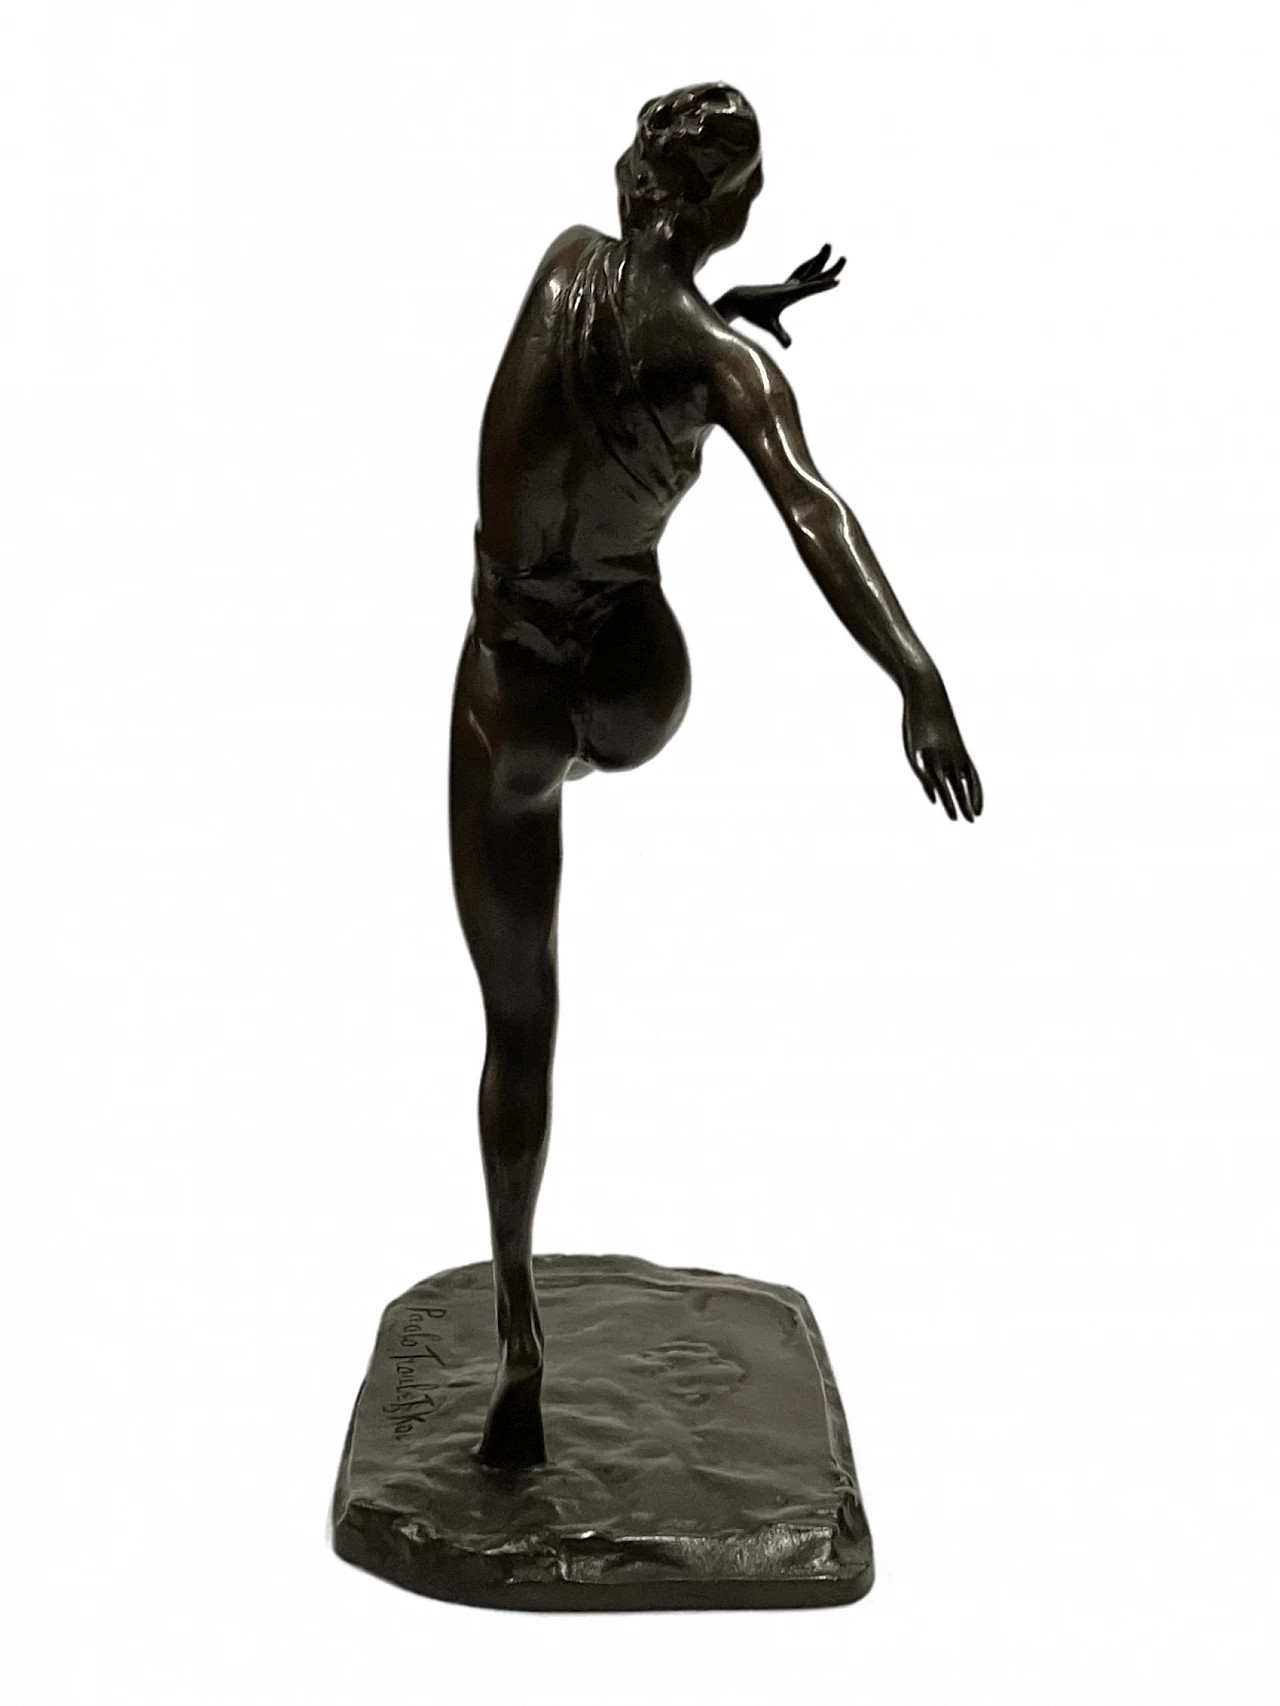 Paul Troubetzkoy, Dancer, bronze sculpture 3